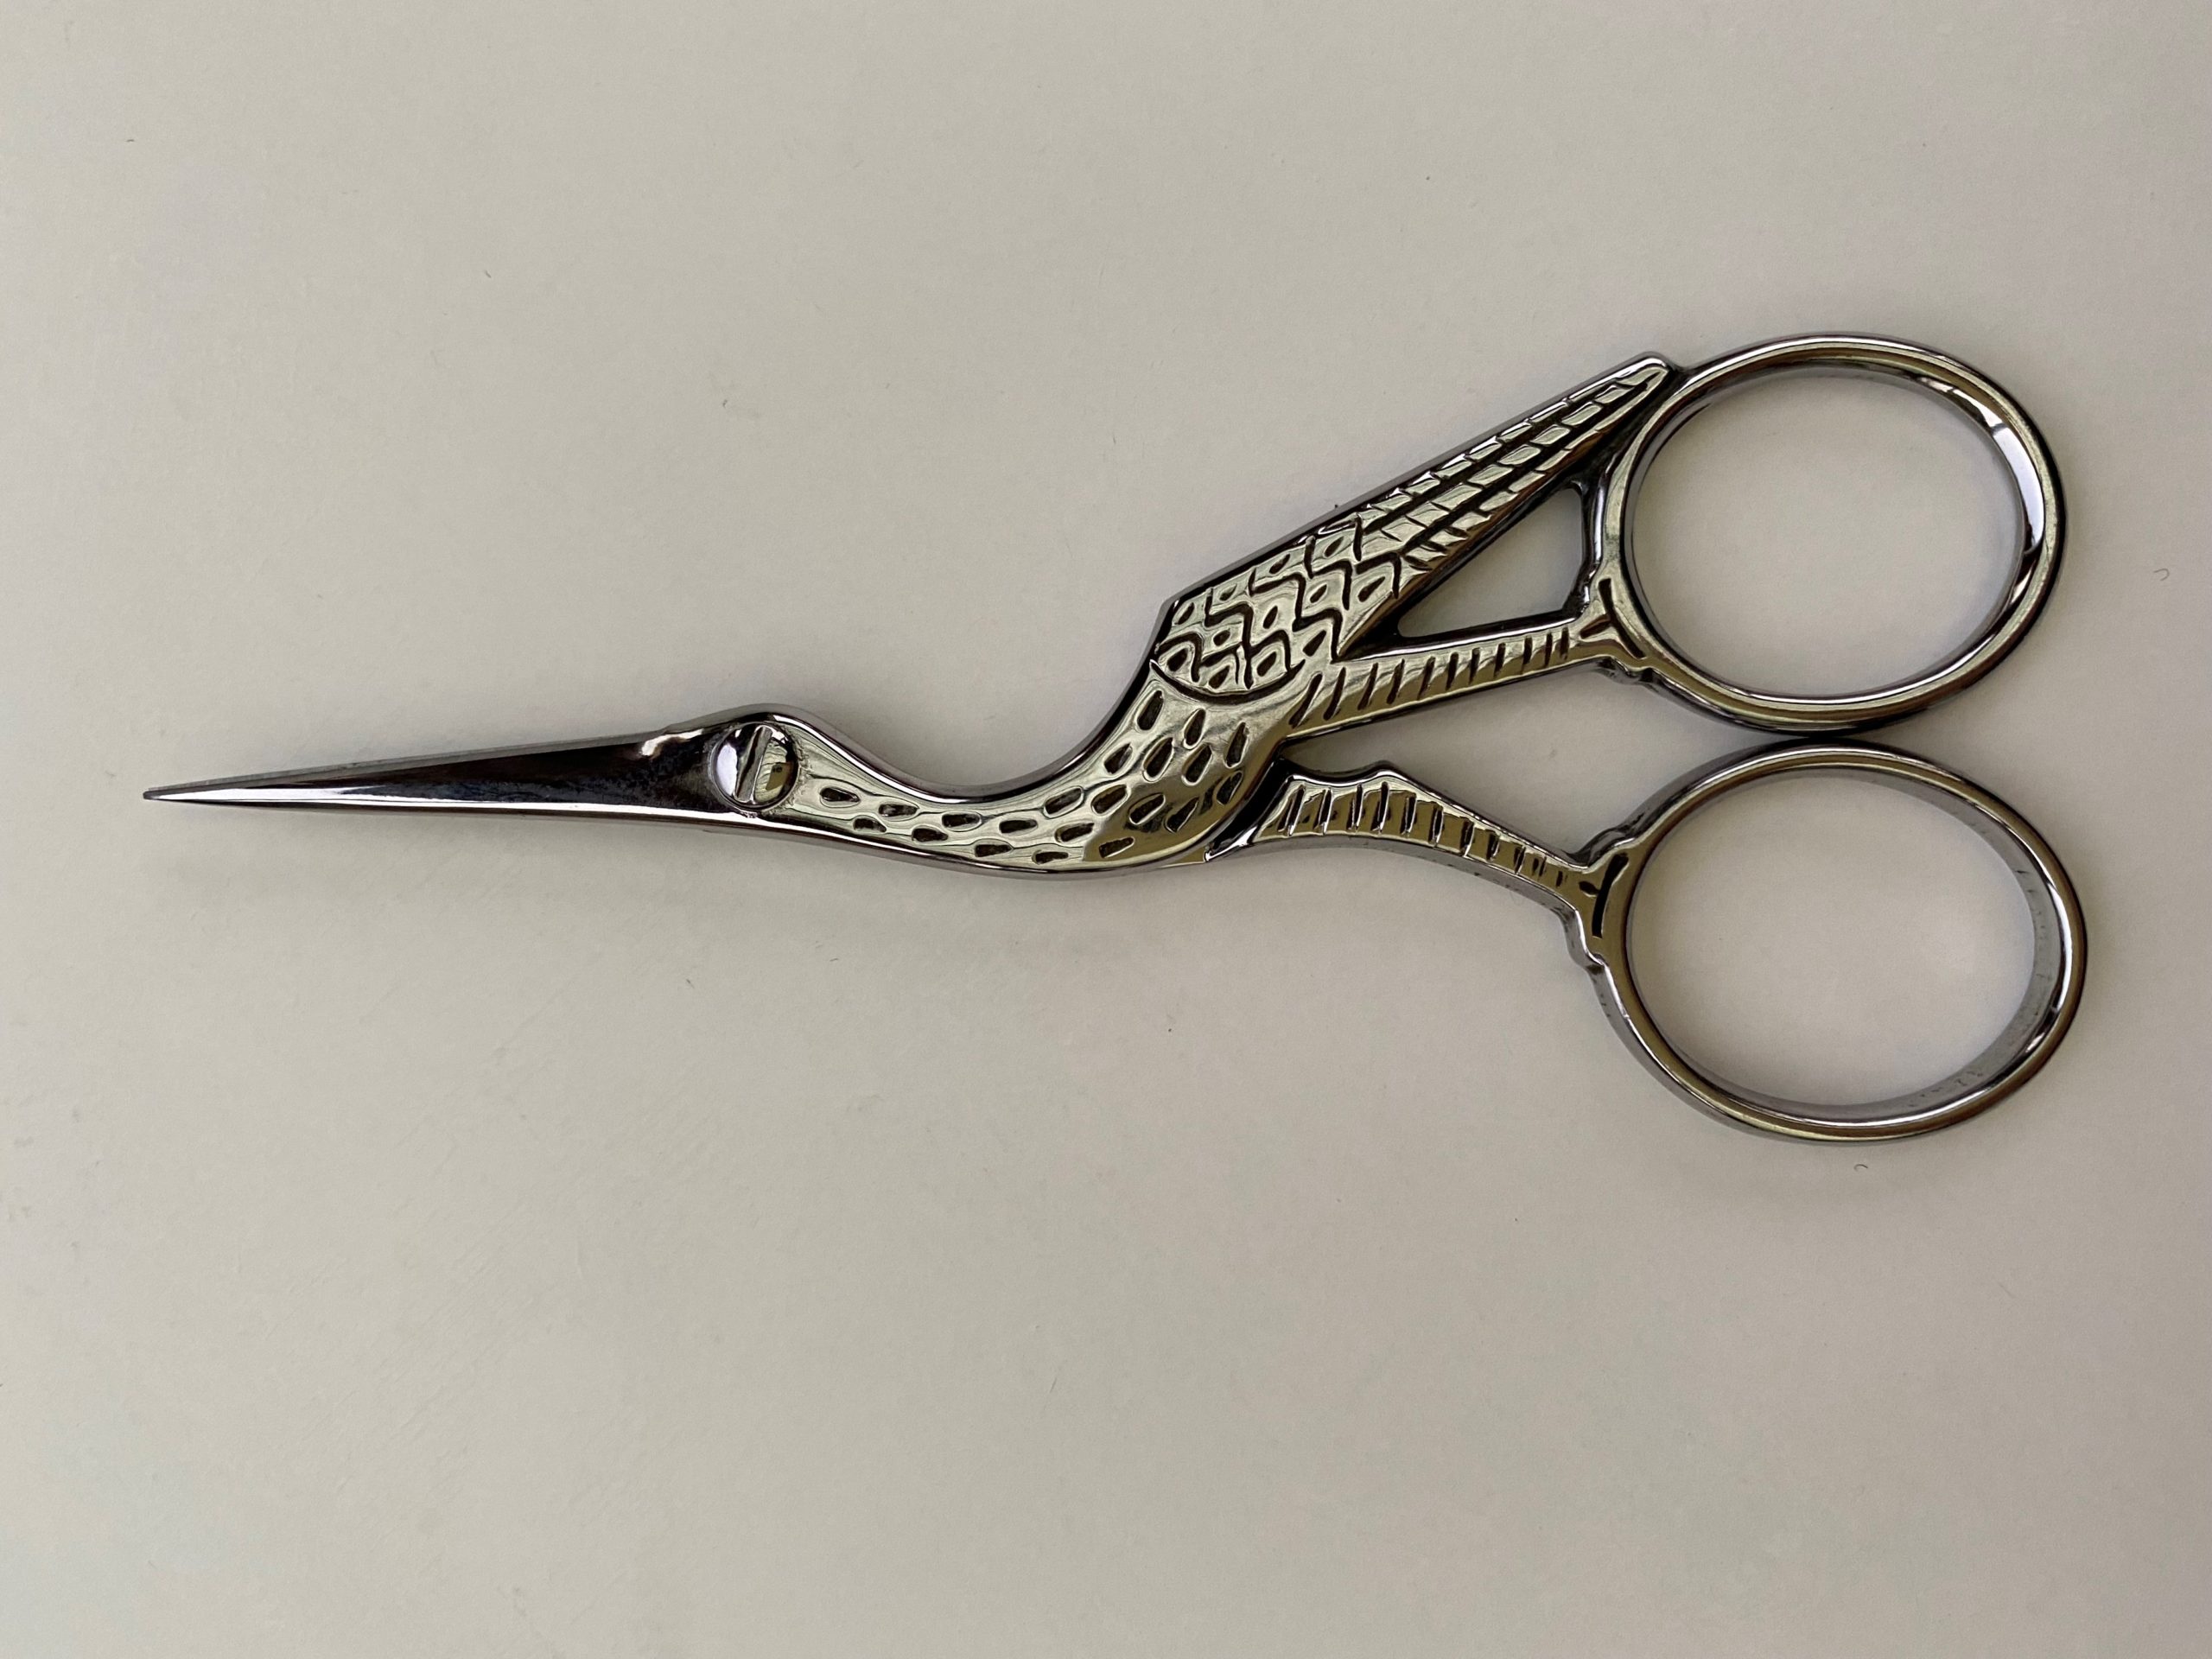 Antique Stork embroidery scissors